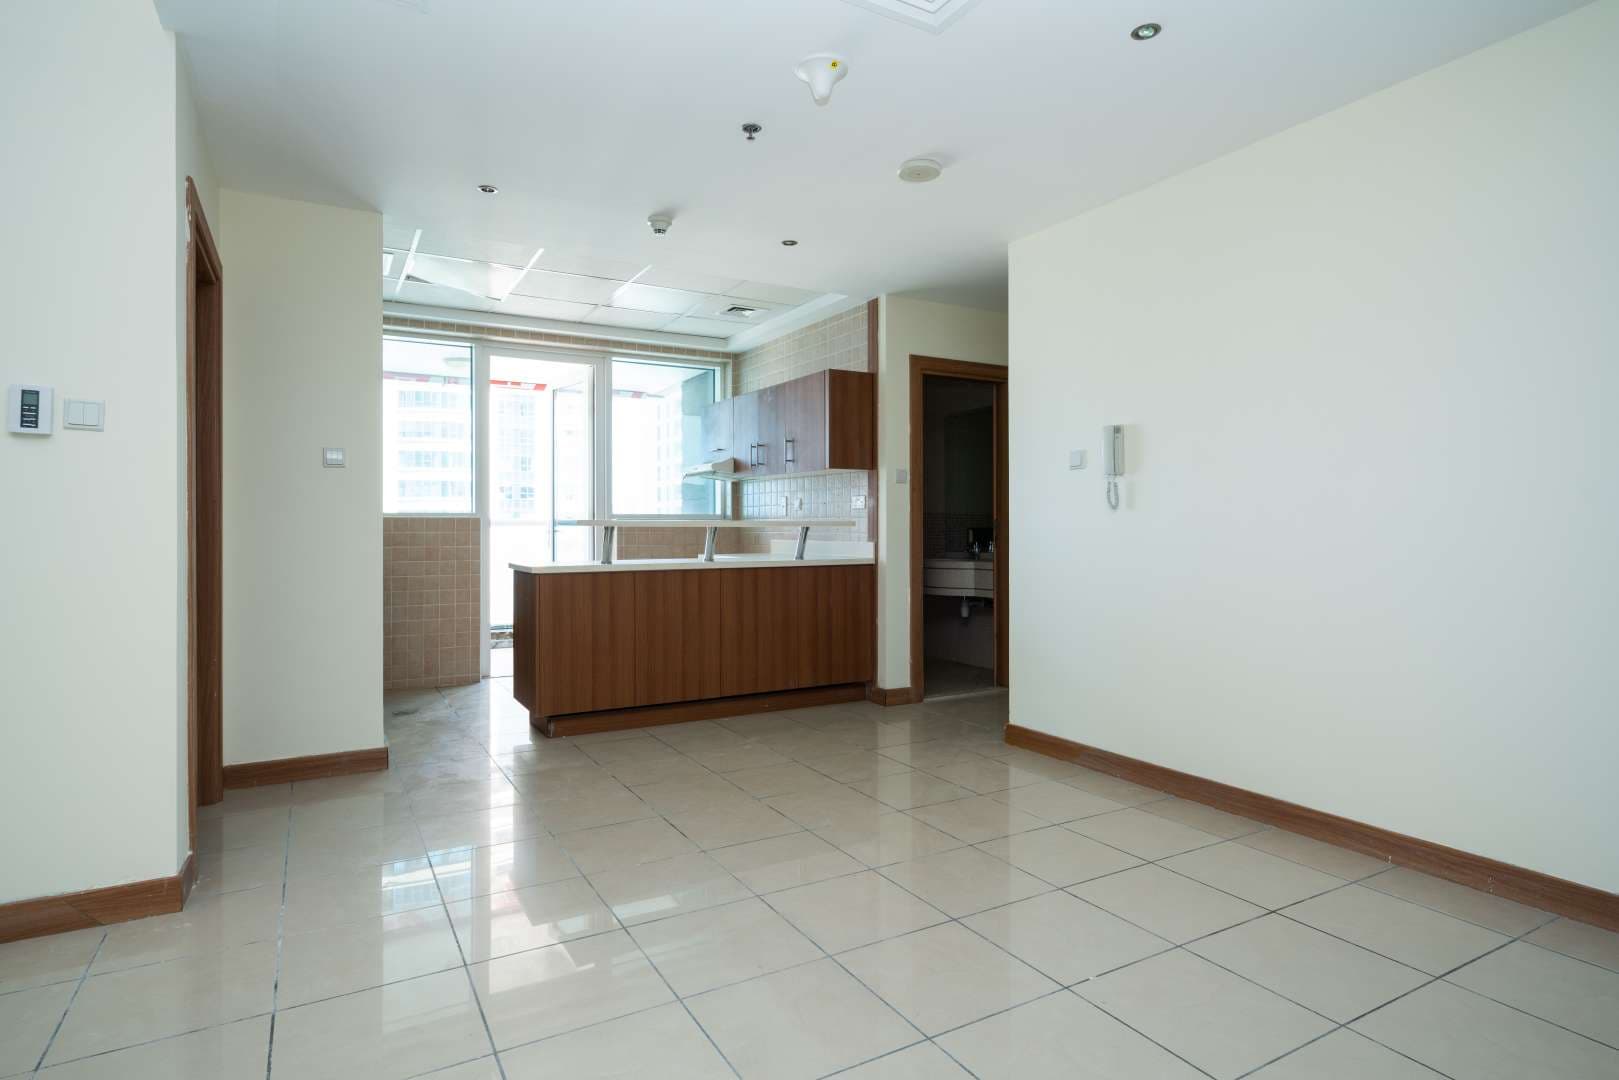 2 Bedroom Apartment For Rent Sulafa Tower Lp04975 1f6f4b84e5da9a00.jpg